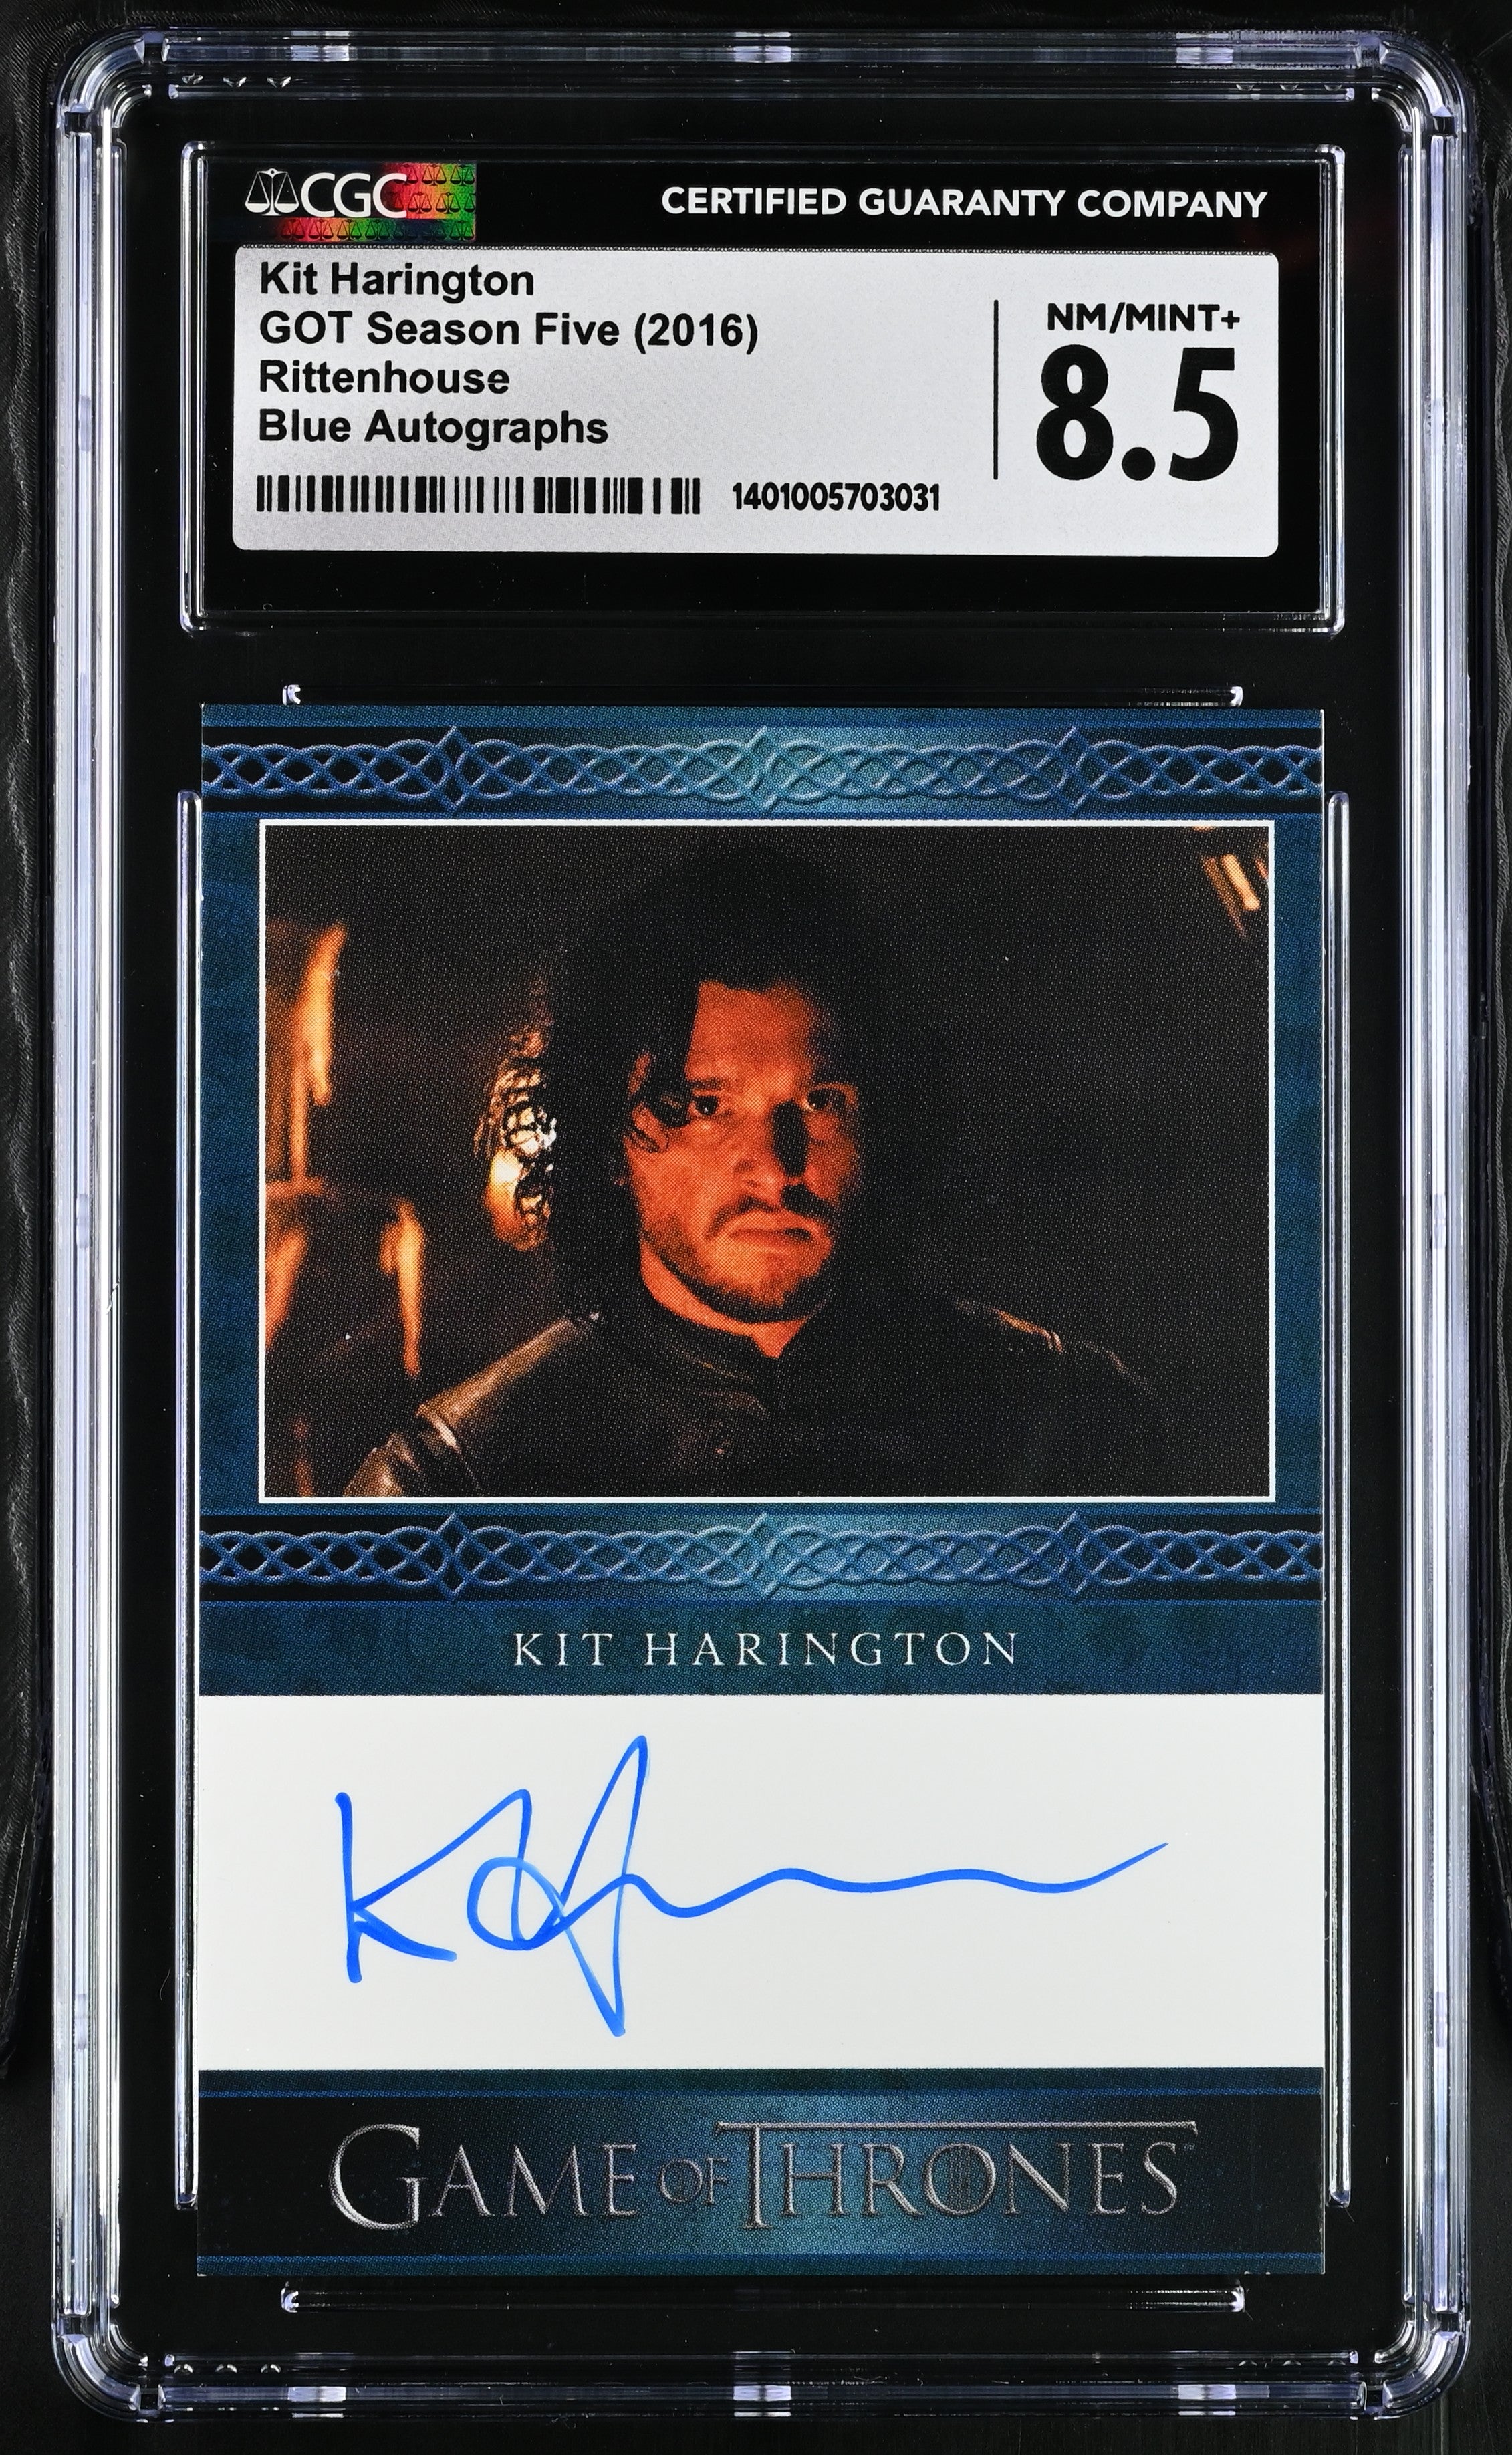 Game of Thrones Season 5 Autograph Card Kit Harington as Jon Snow CGC 8.5 NM/Mint+